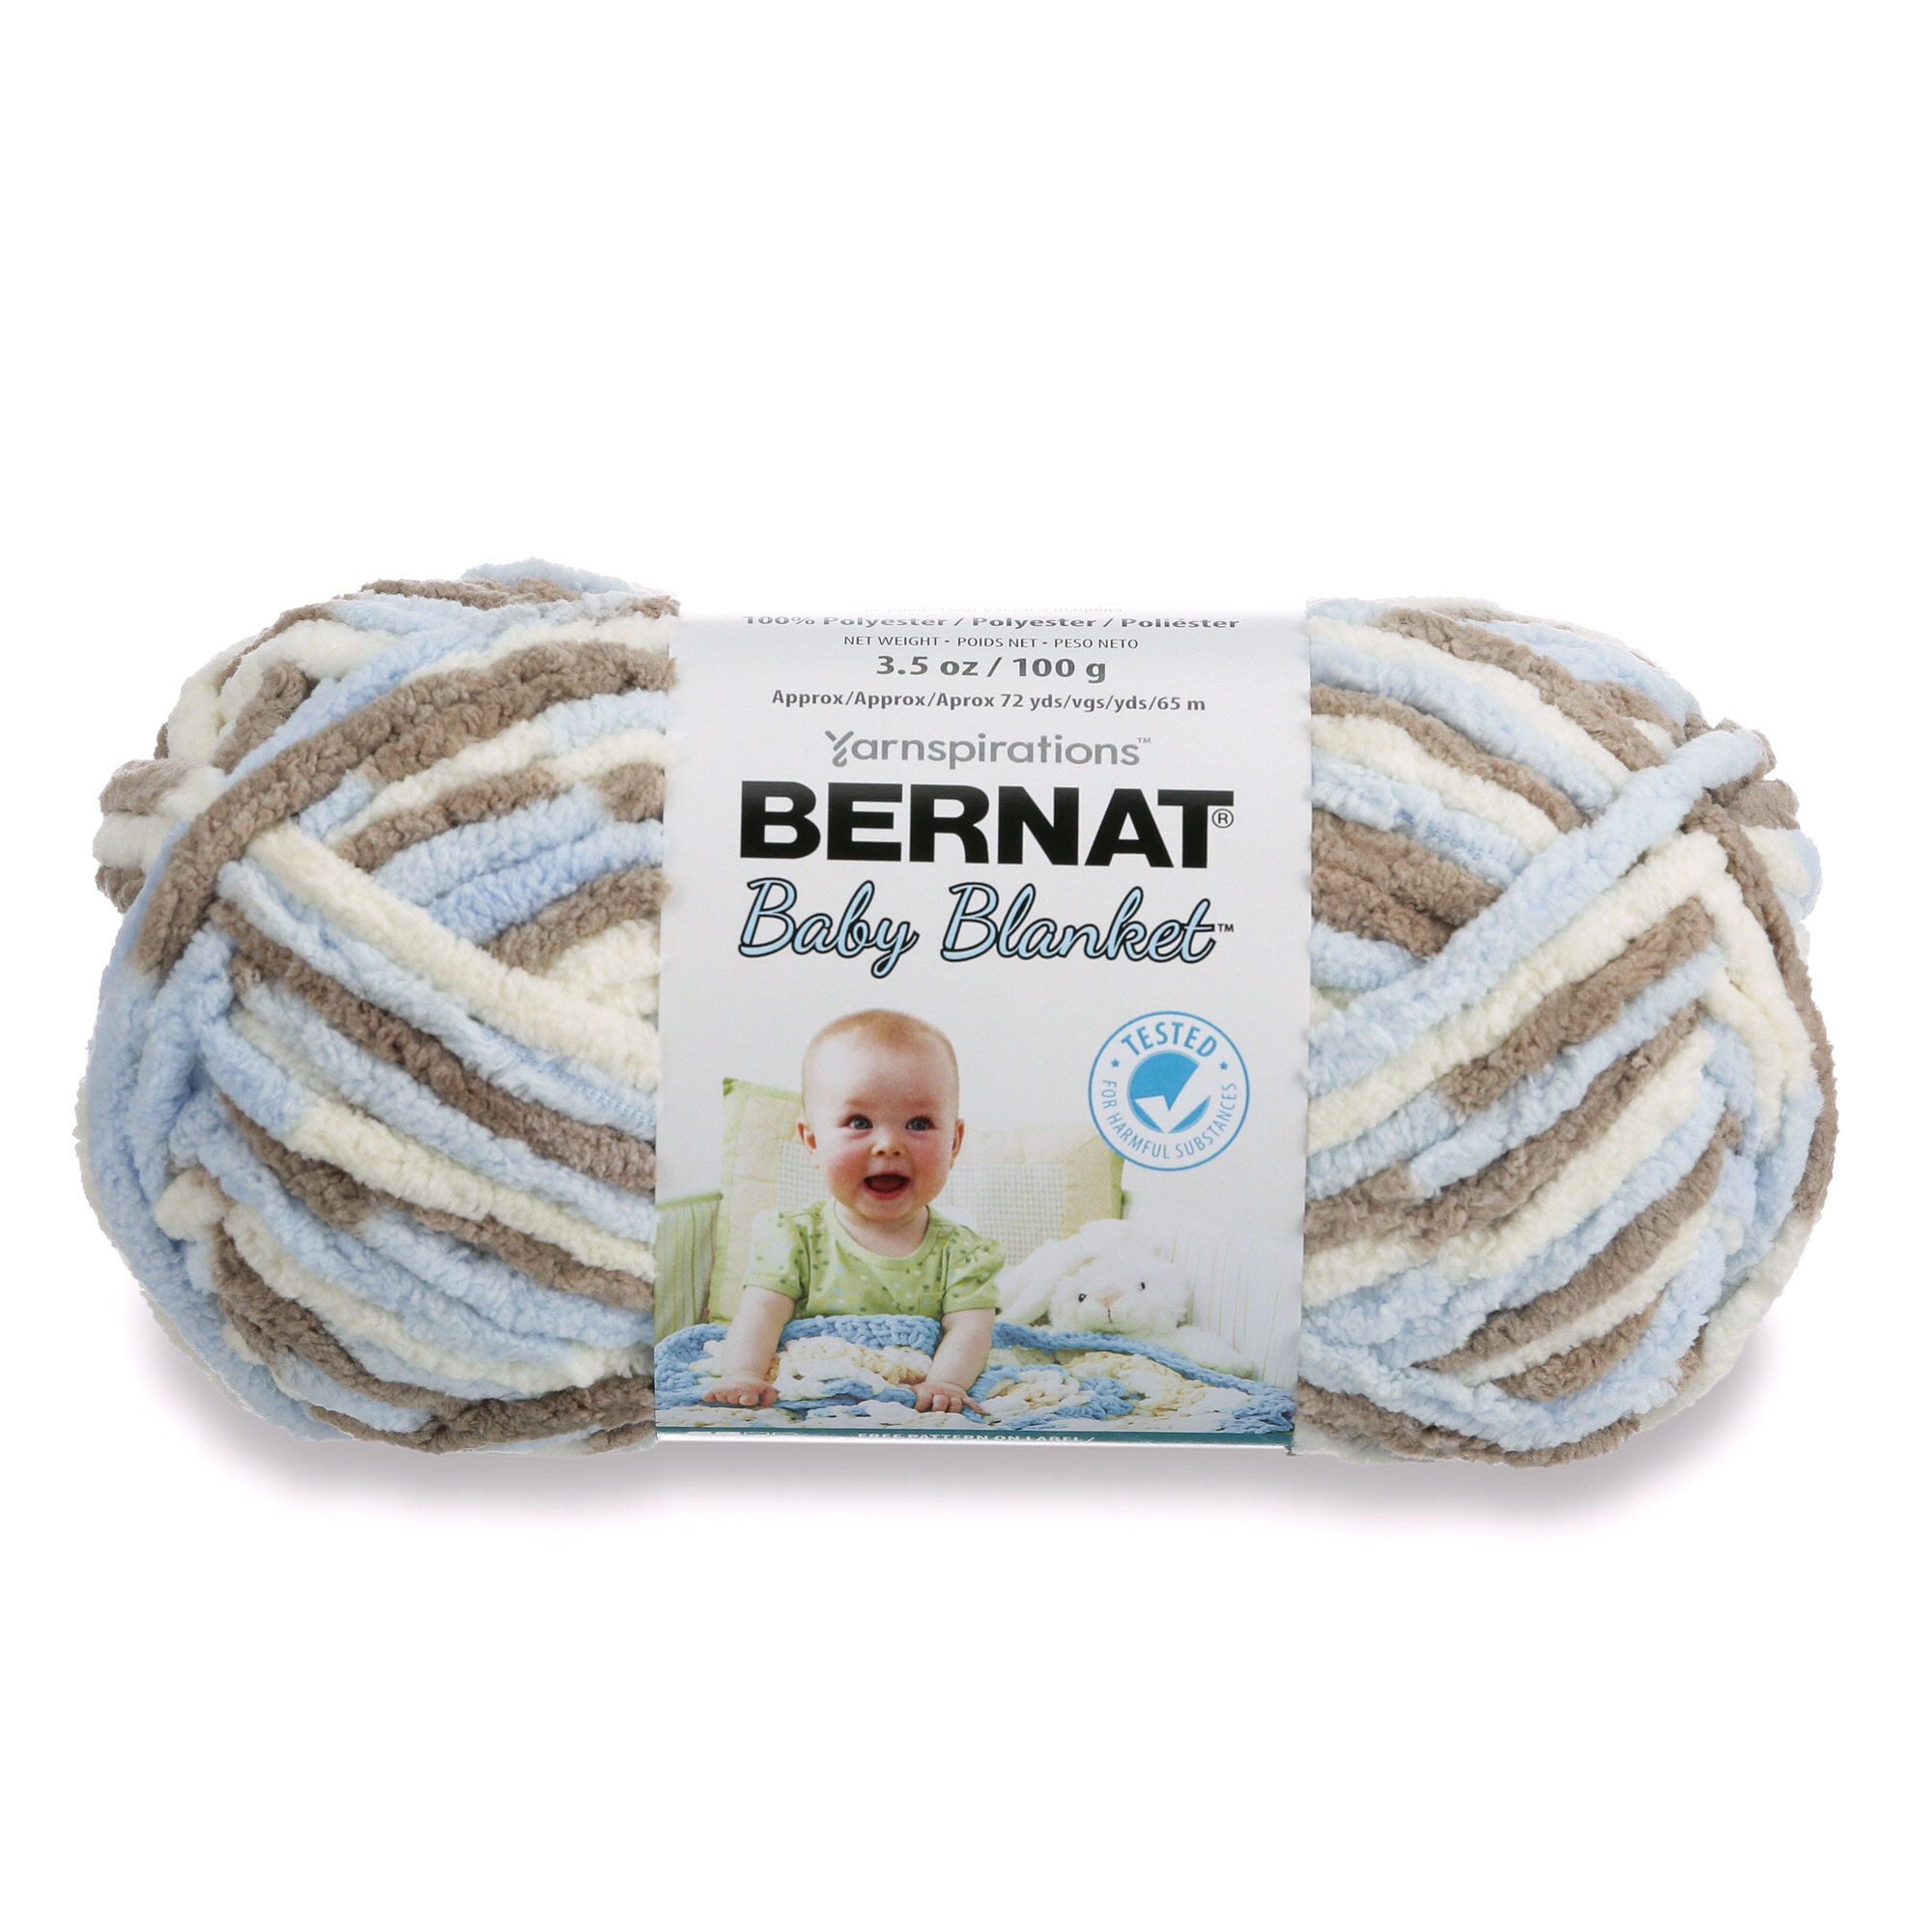 Bernat Baby Blanket Dappled Ever After Pink Yarn - 2 Pack of 300g/10.5oz -  Polyester - 6 Super Bulky - 220 Yards - Knitting/Crochet